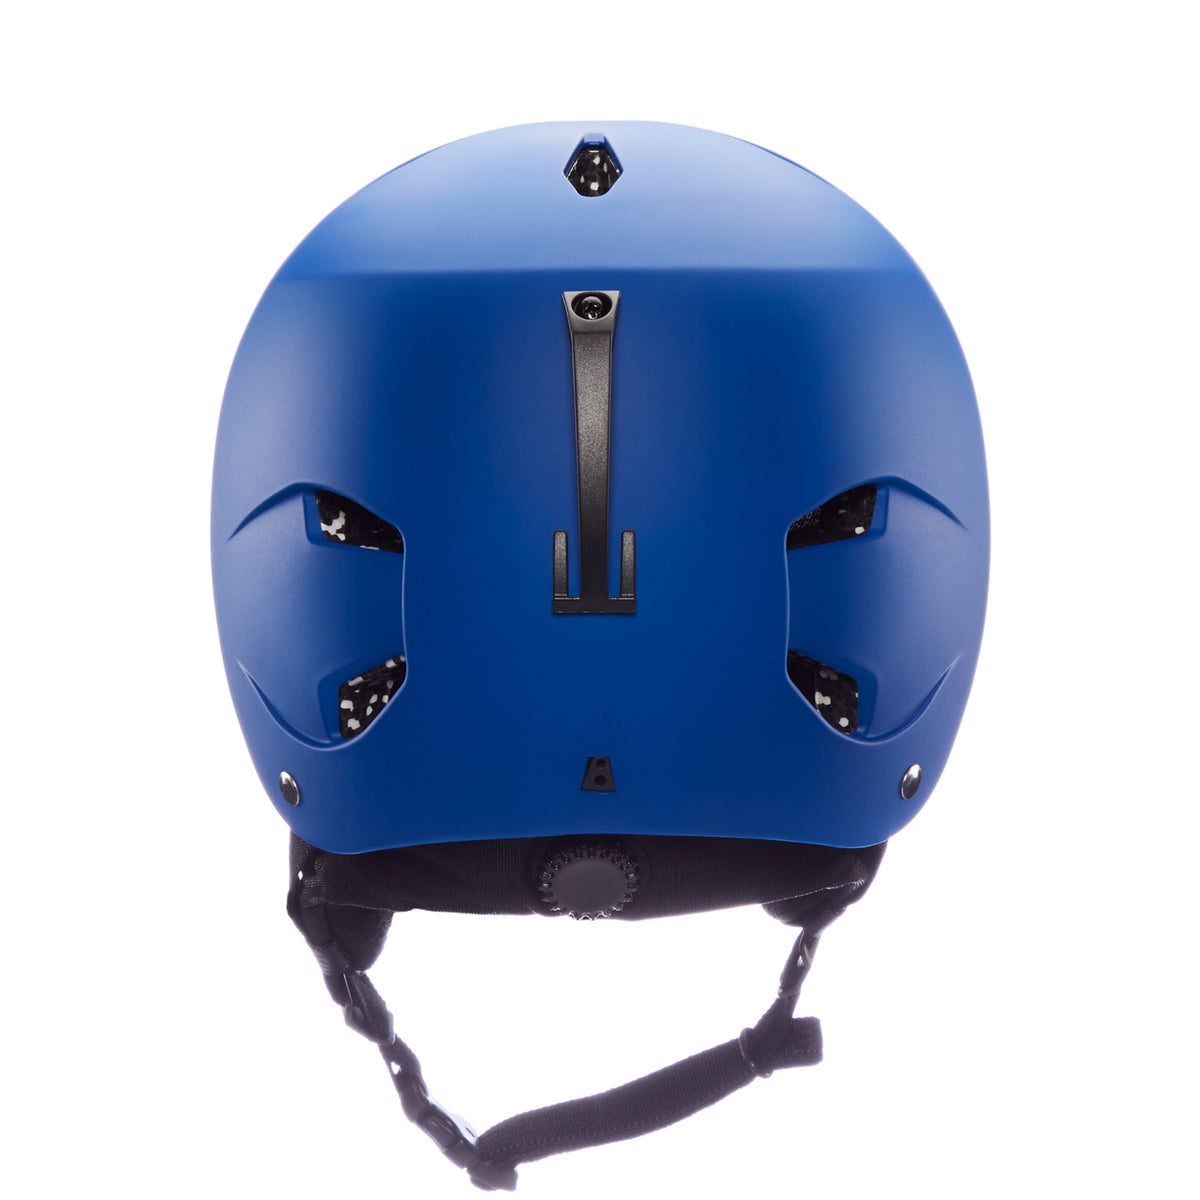 Bandito Winter Helmet with Compass Fit – Bern Helmets